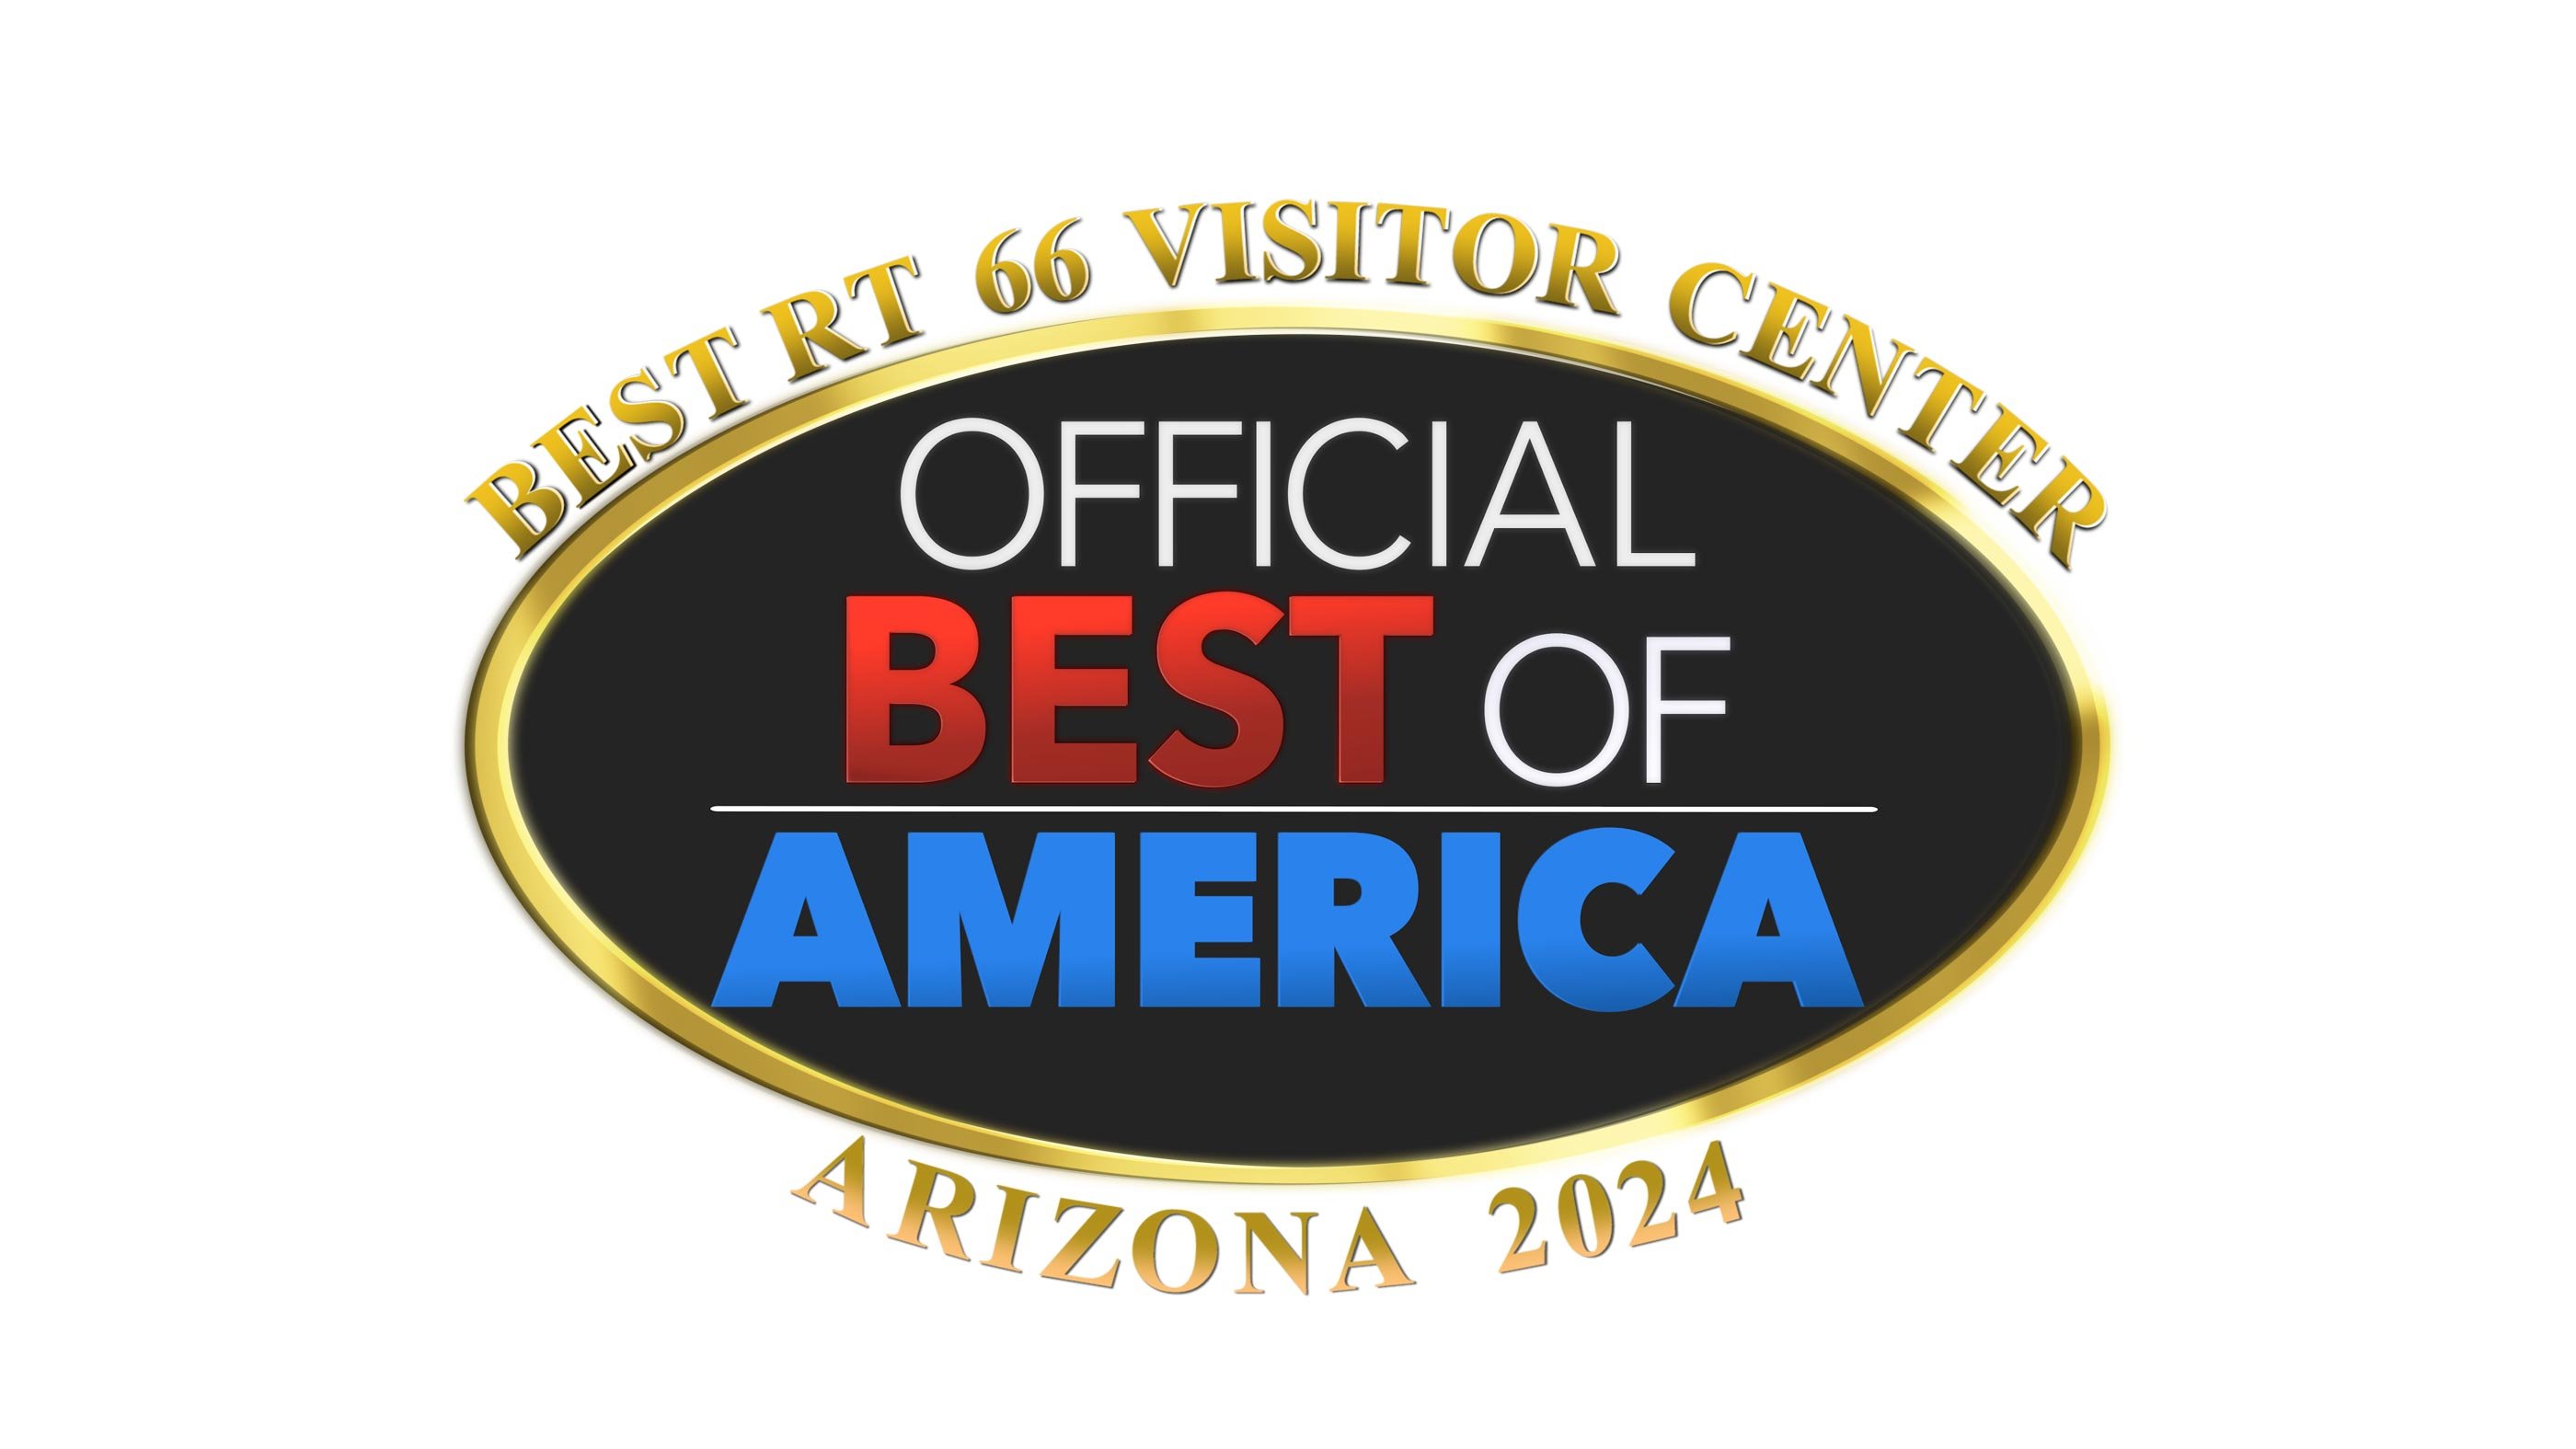 Kingman - Best Route 66 Visitor Center in Arizona